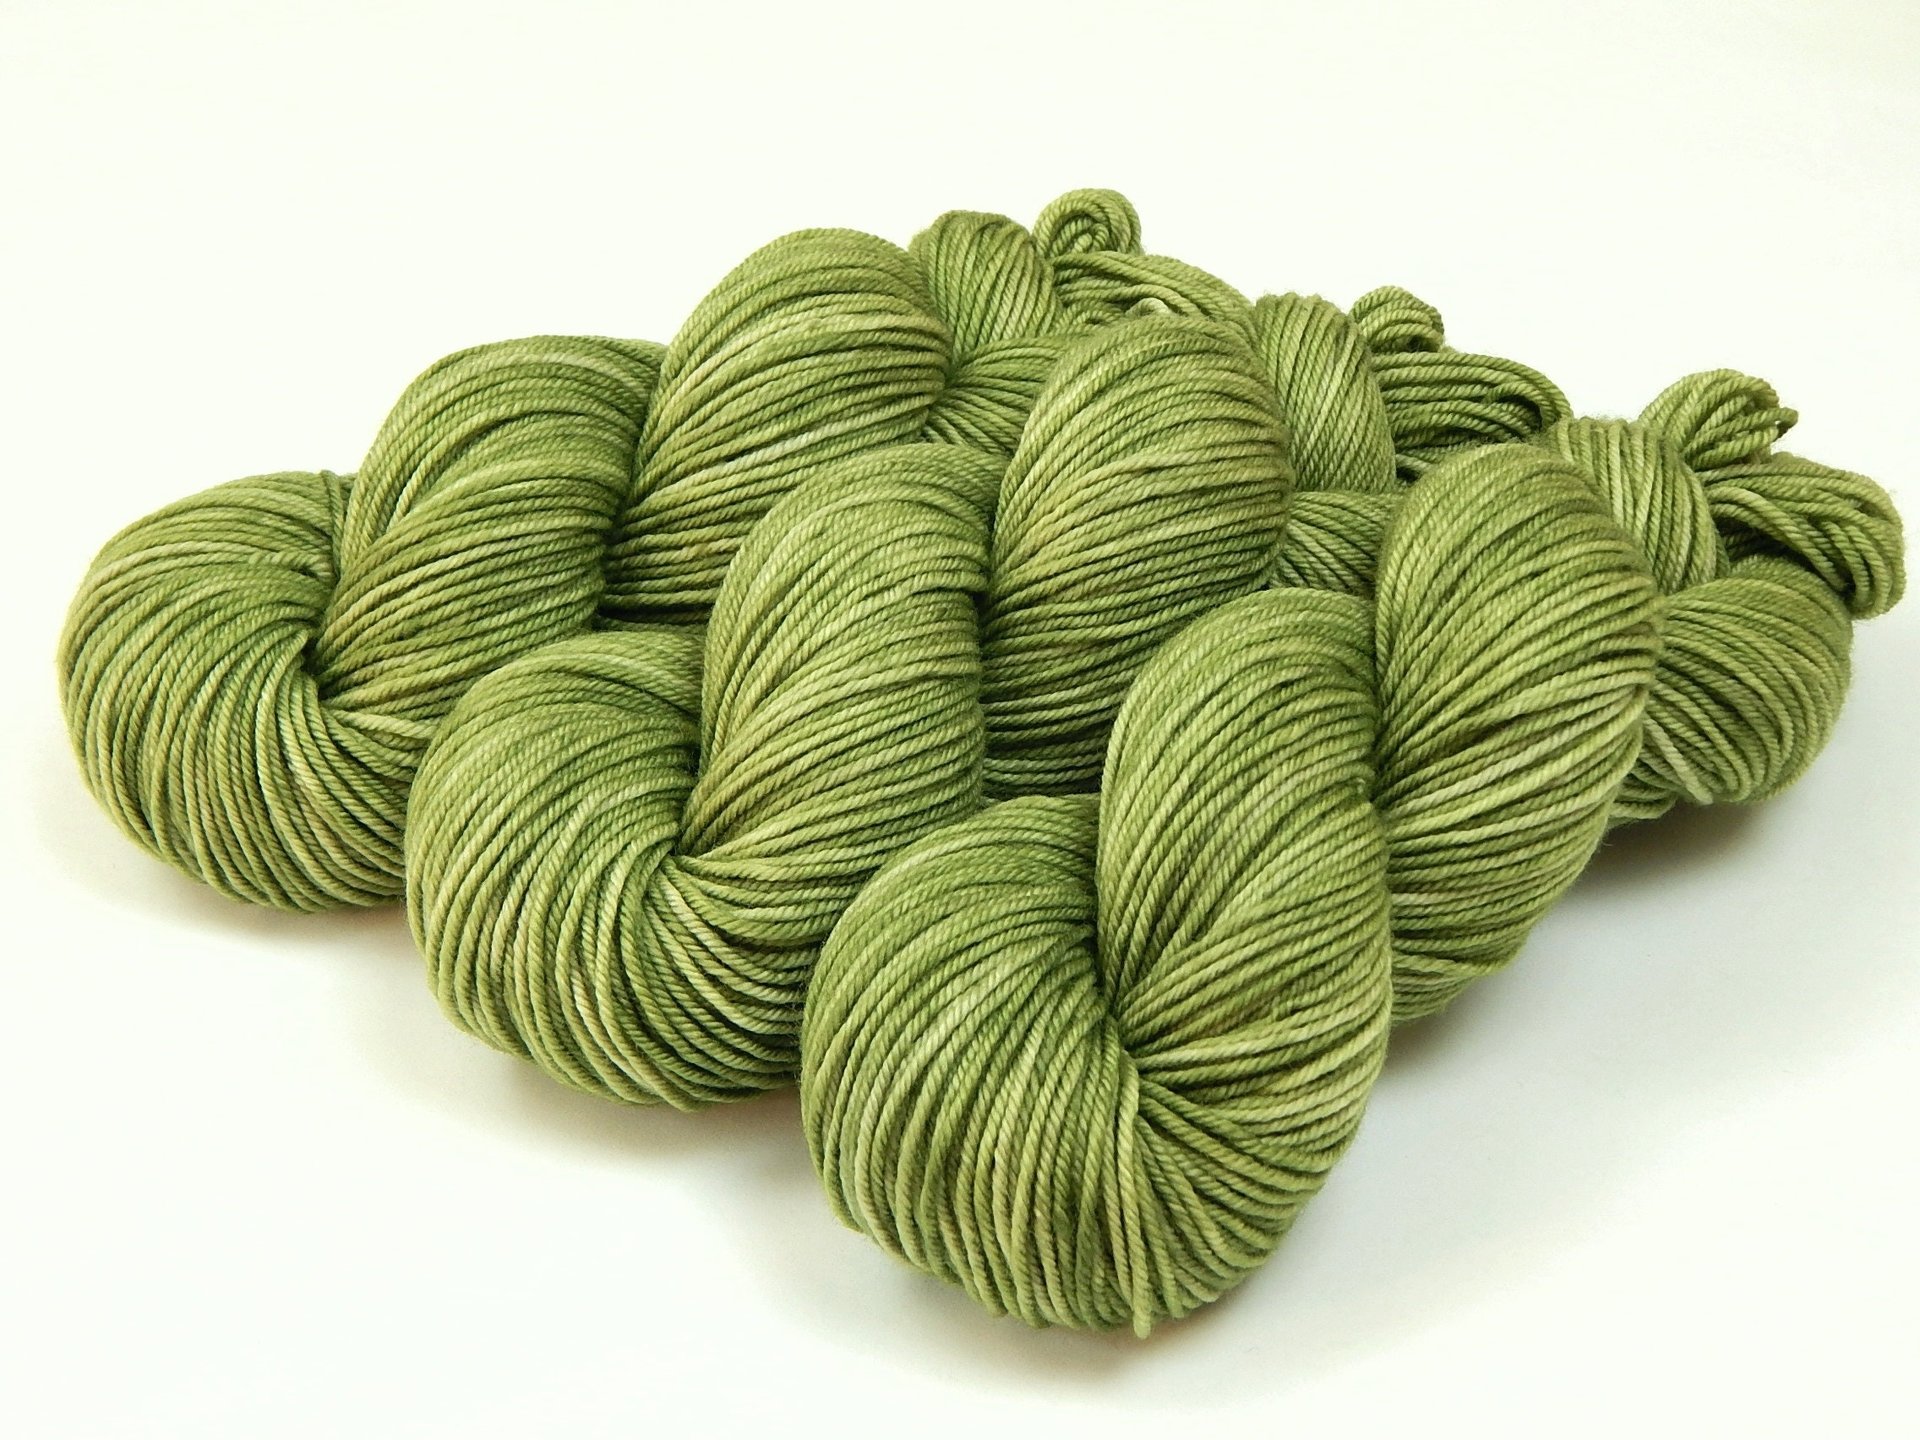 Hand Dyed DK Weight Yarn, 100% Superwash Merino Wool - Green Tea - Indie Dyer Light Olive Yarn, Tonal Sage Green Knitting Yarn